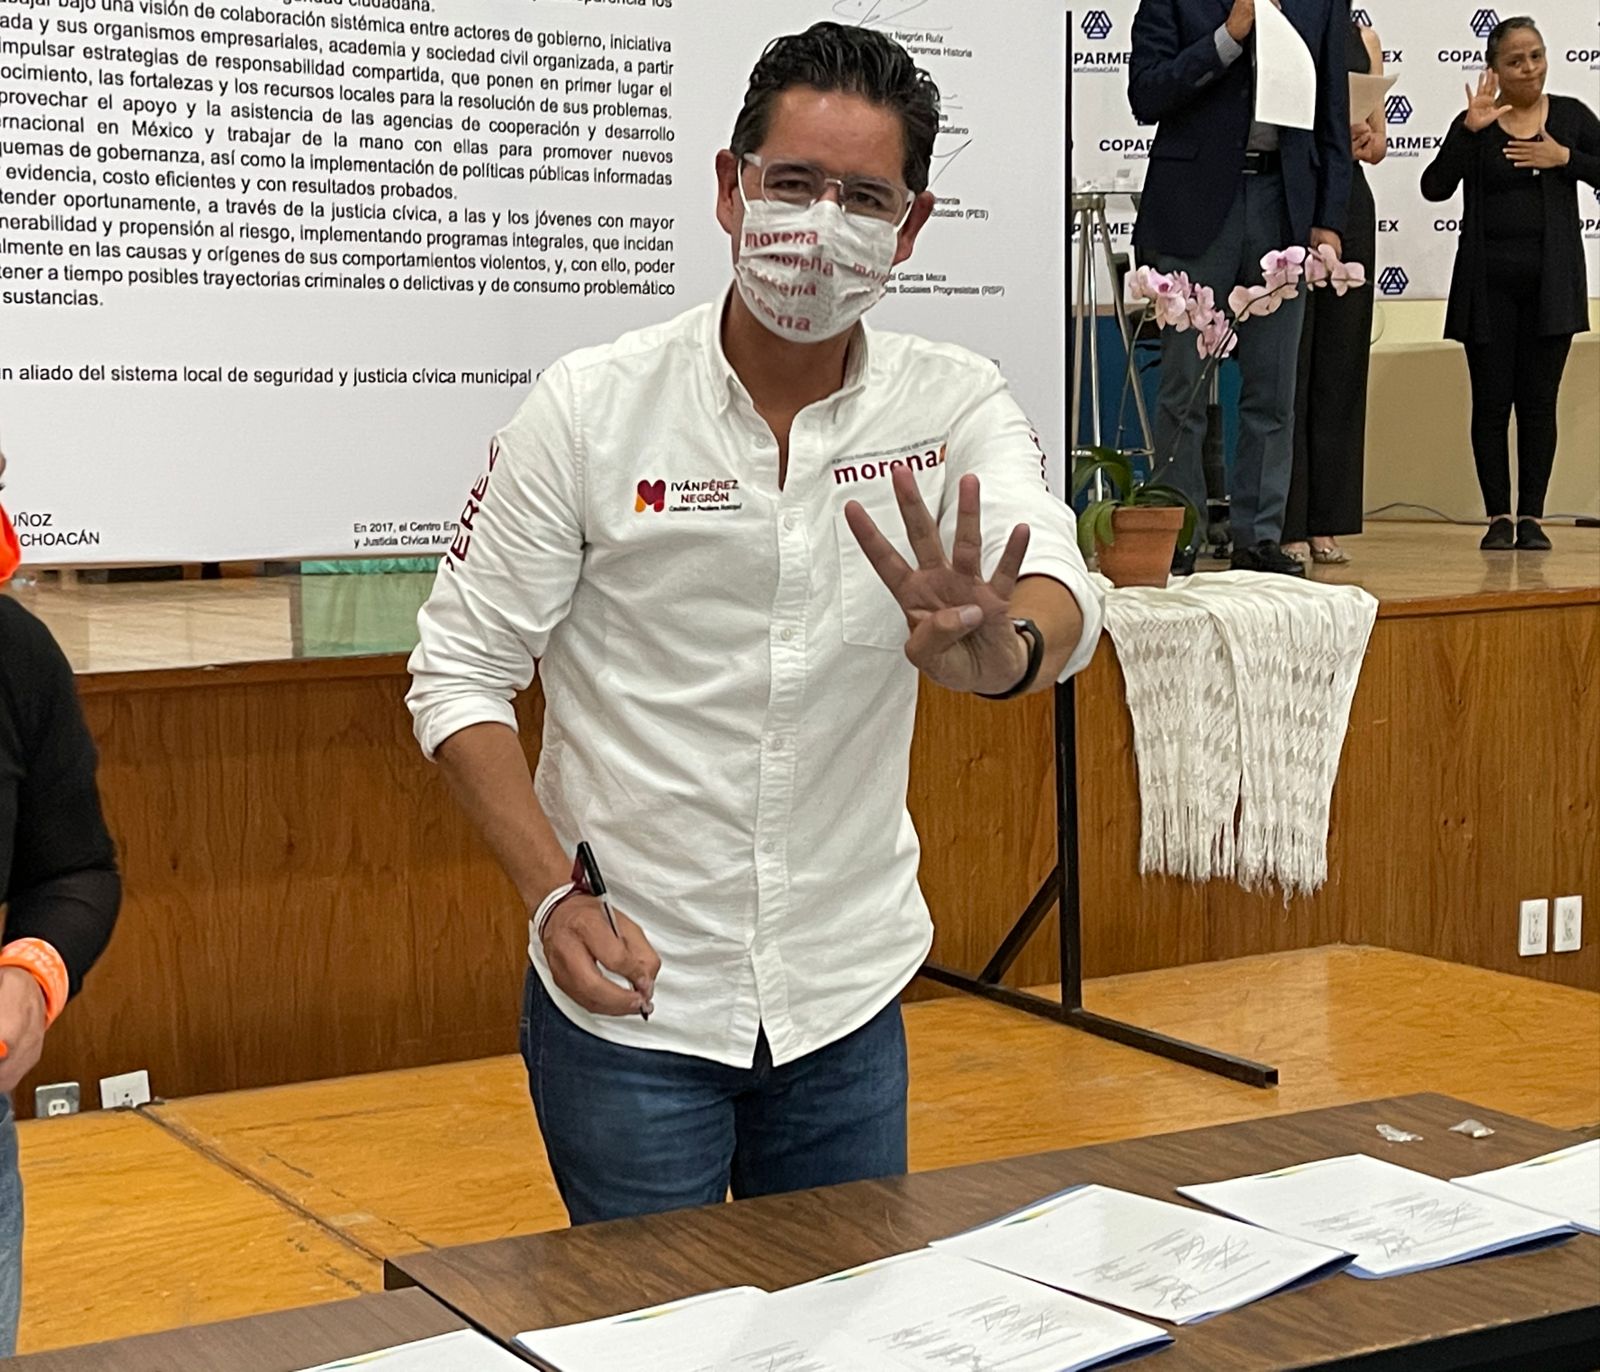 Iván Pérez Negrón signs security and civic justice agreement before COPARMEX